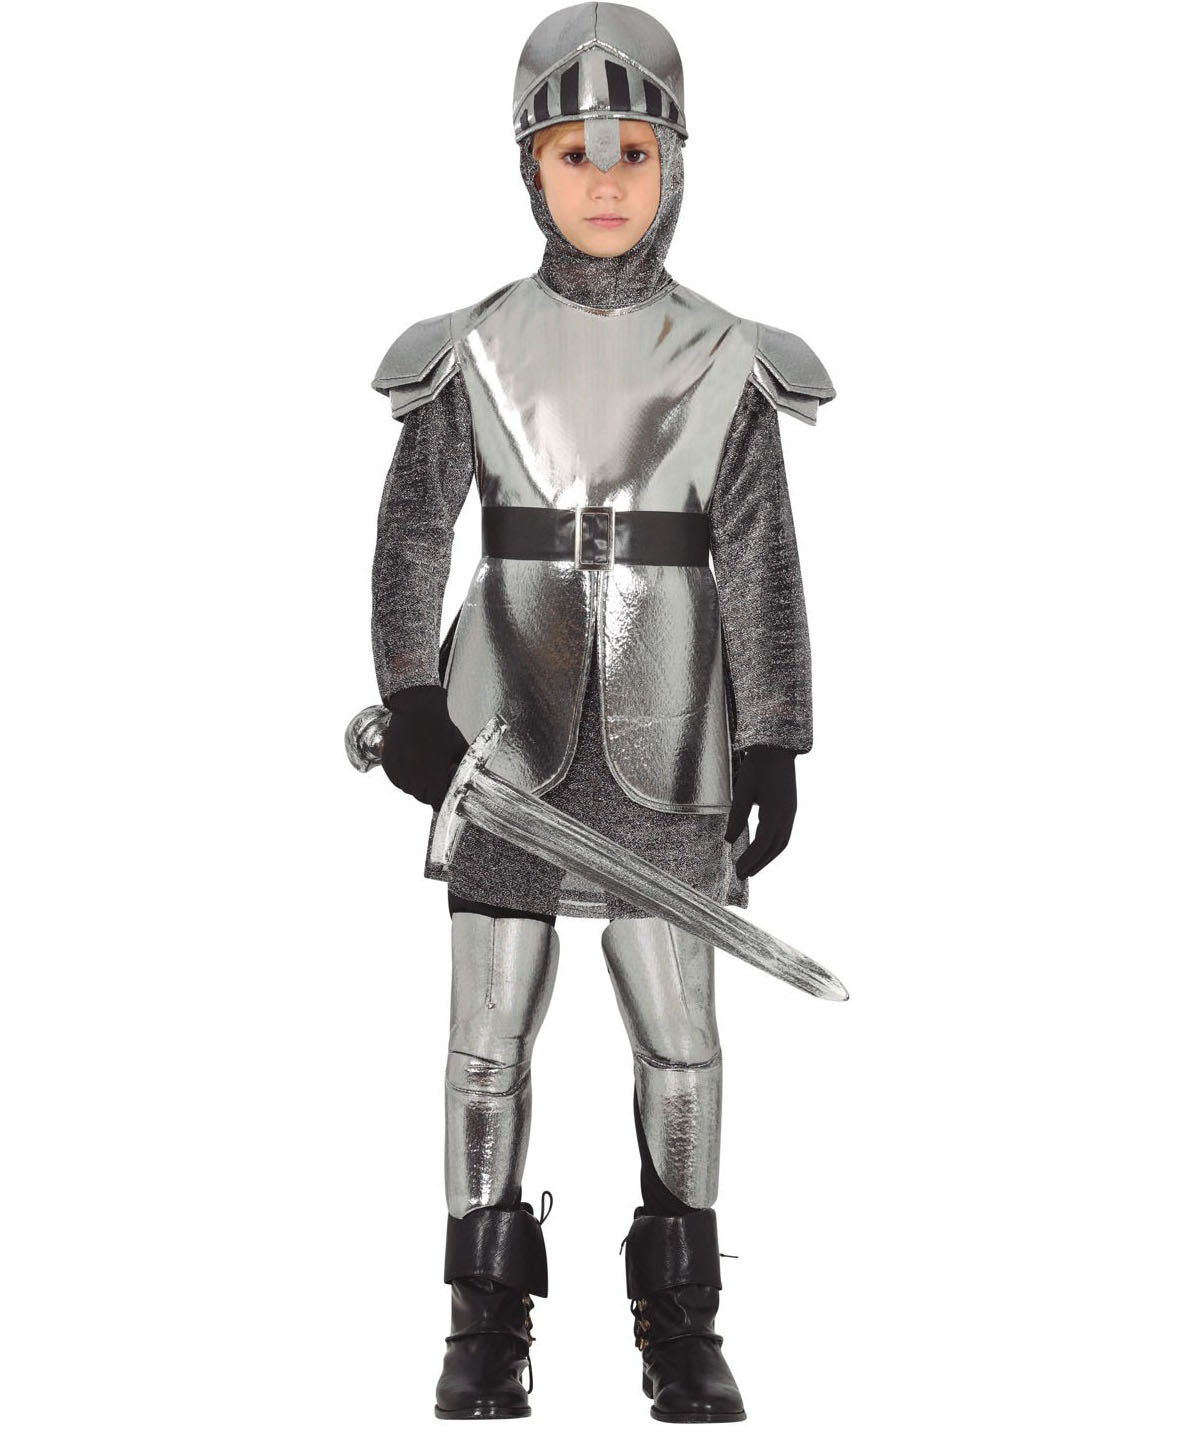 Armoured Knight Costume